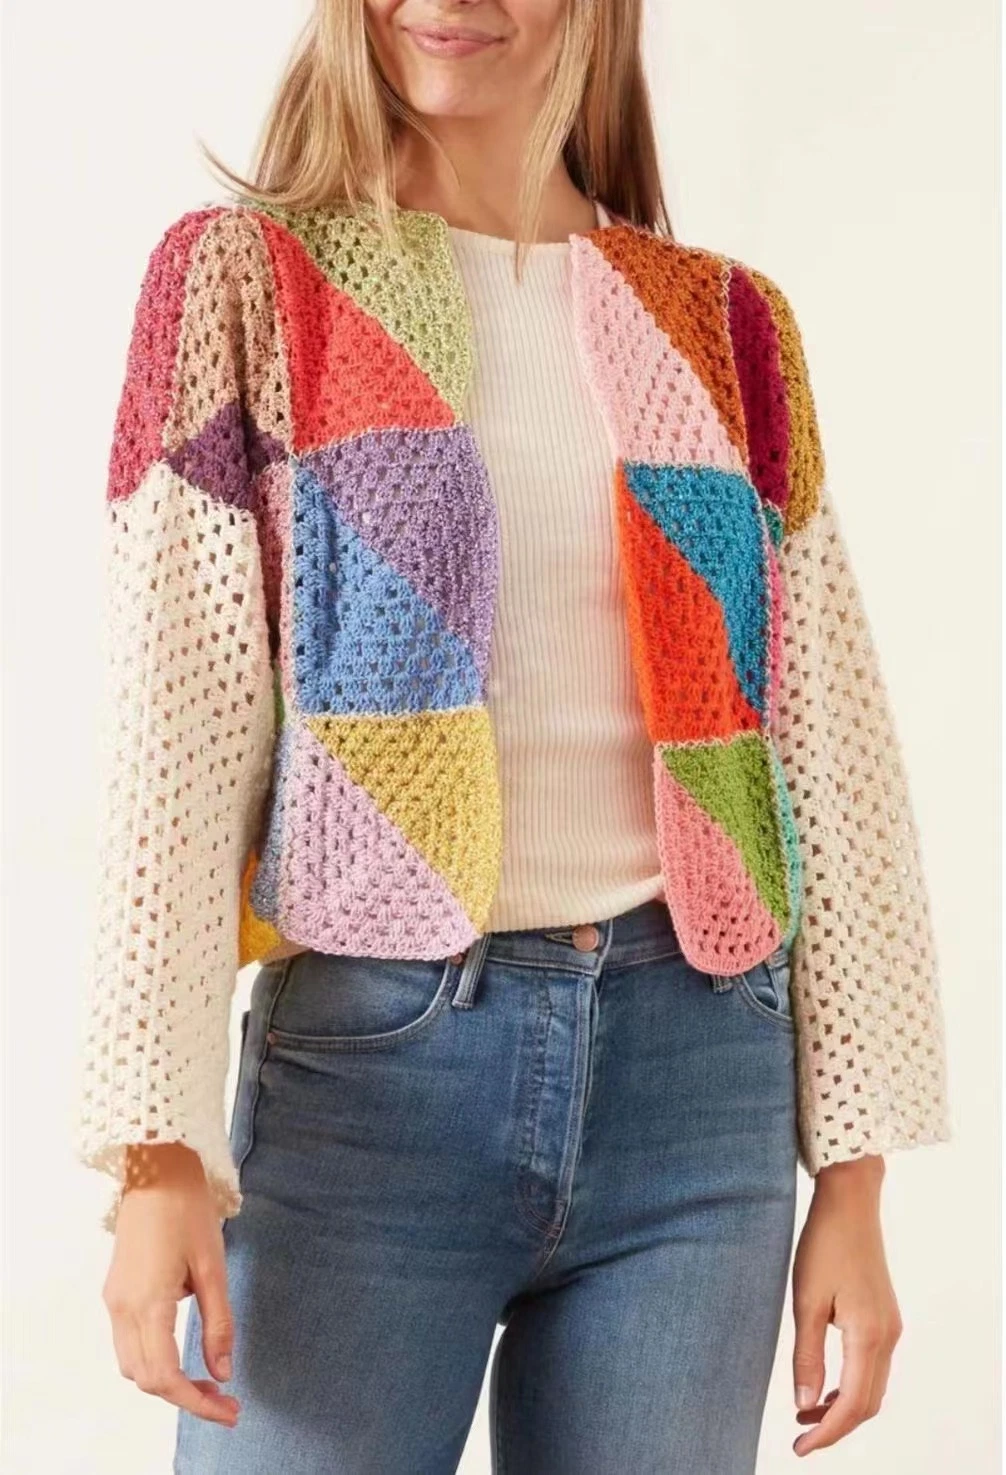 Colorful Ladies Fashion Clothing Apparel Crochet Acrylic Spring Summer Knitwear Cardigan Designer Women Top